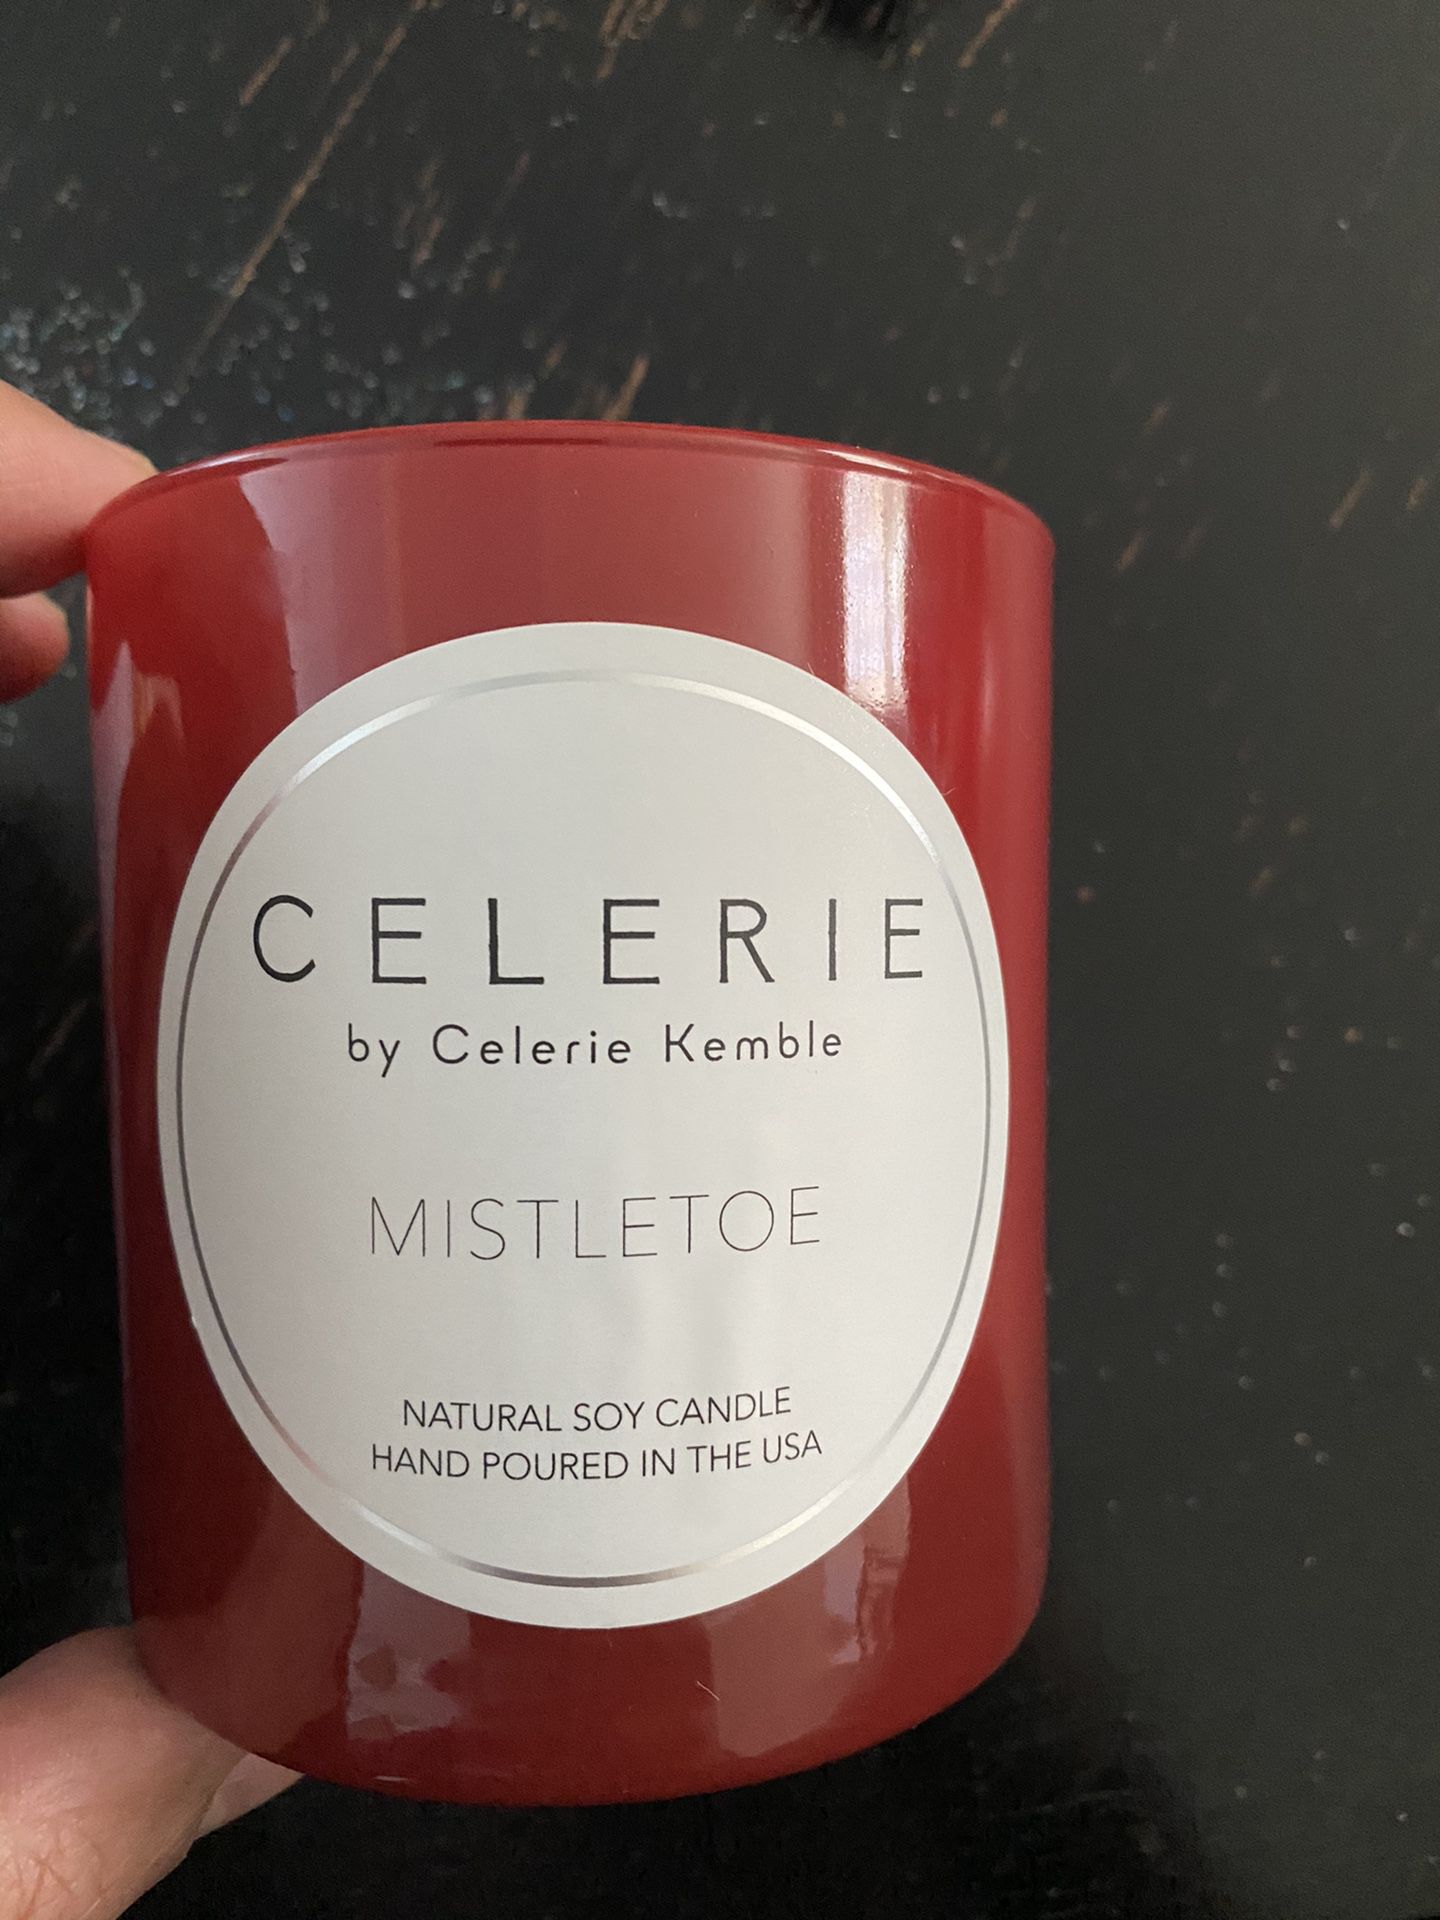 Celerie Kemble Natural Soy Candle - Mistletoe